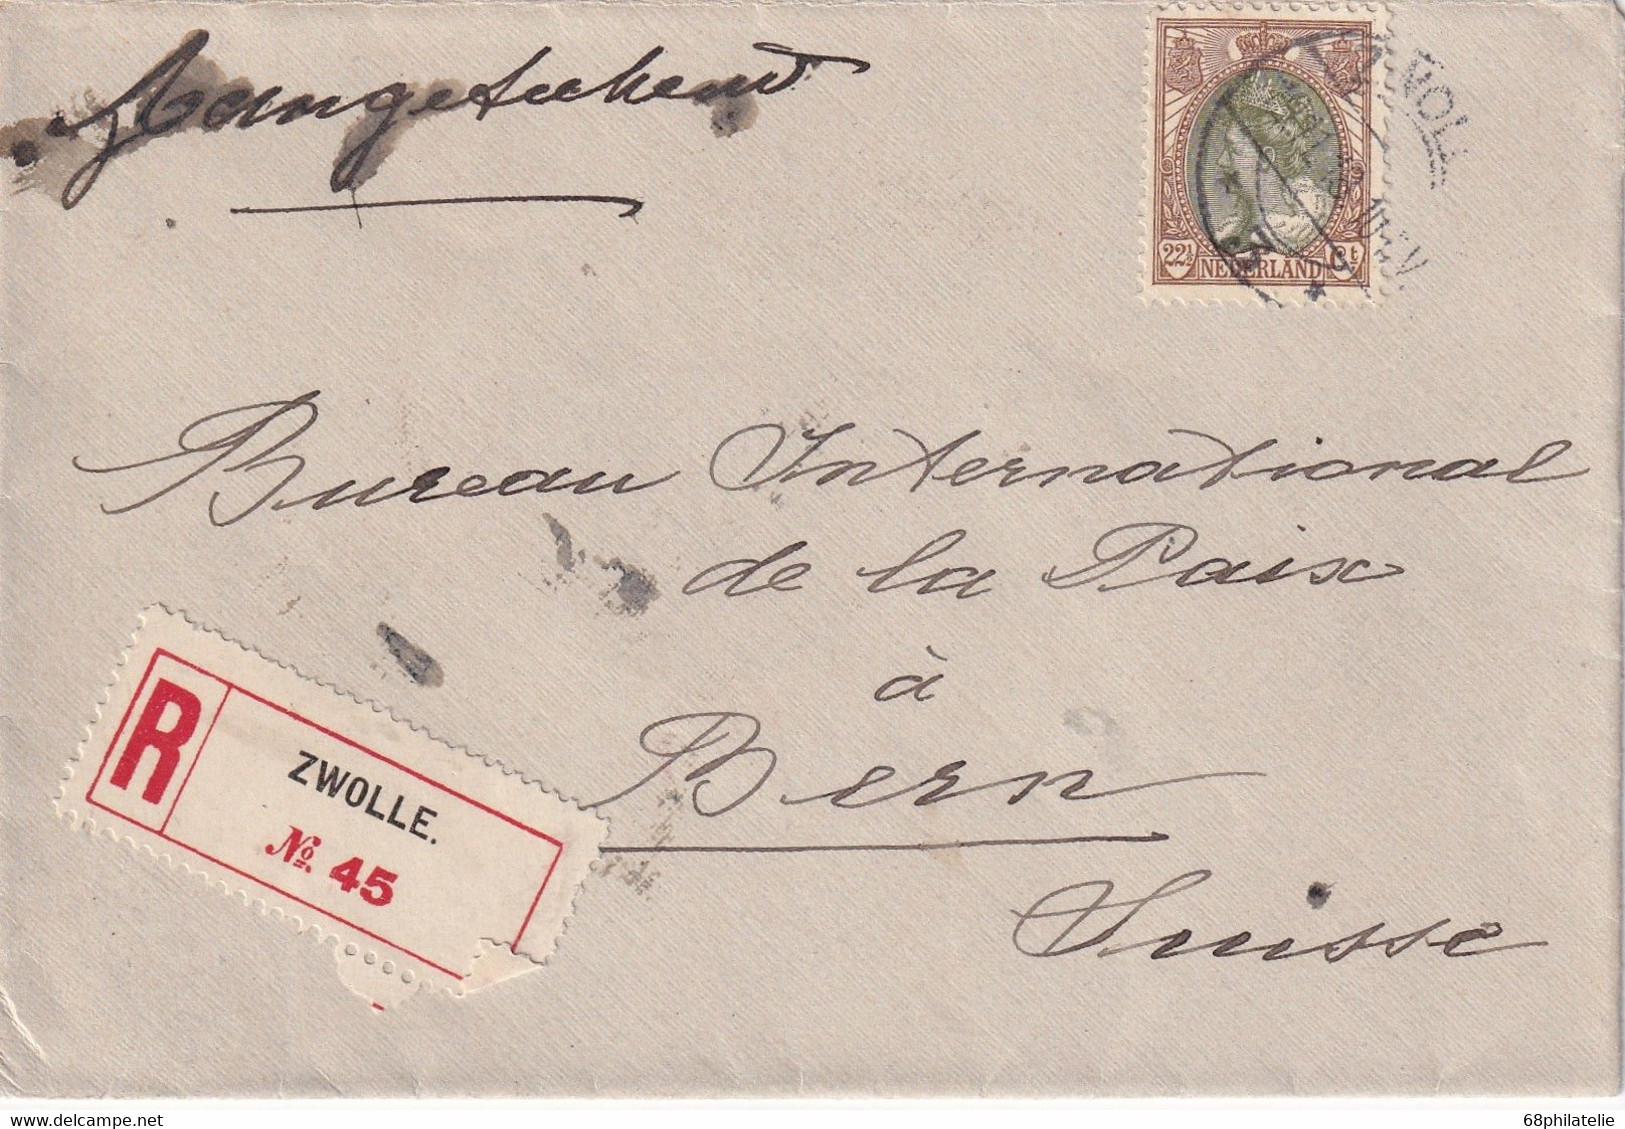 PAYS-BAS 1918 LETTRE RECOMMANDEE DE ZWOLLE - Covers & Documents